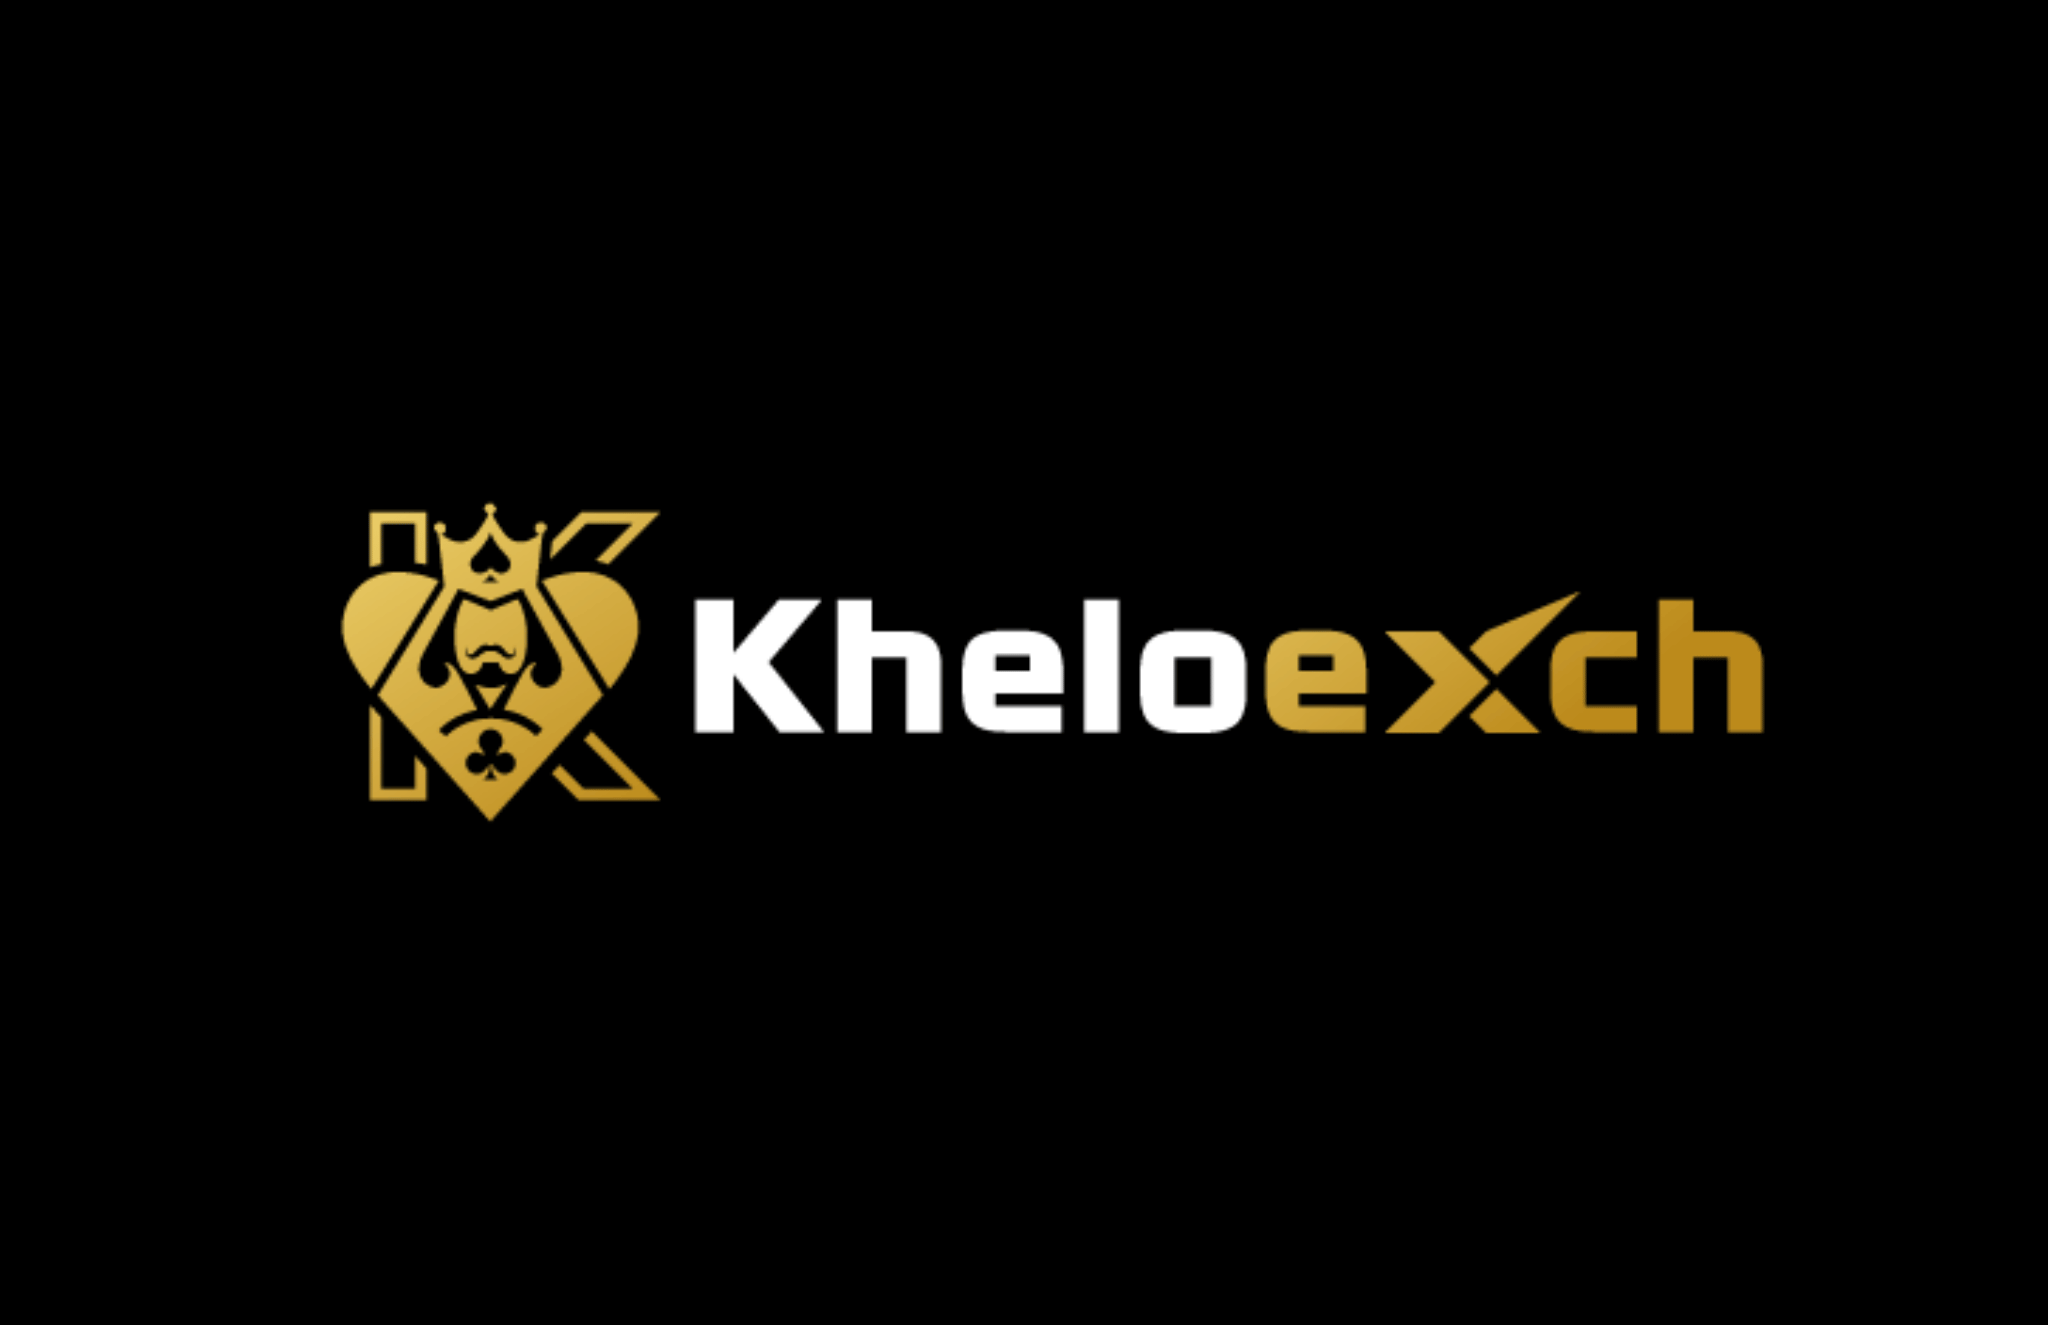 Kheloexch